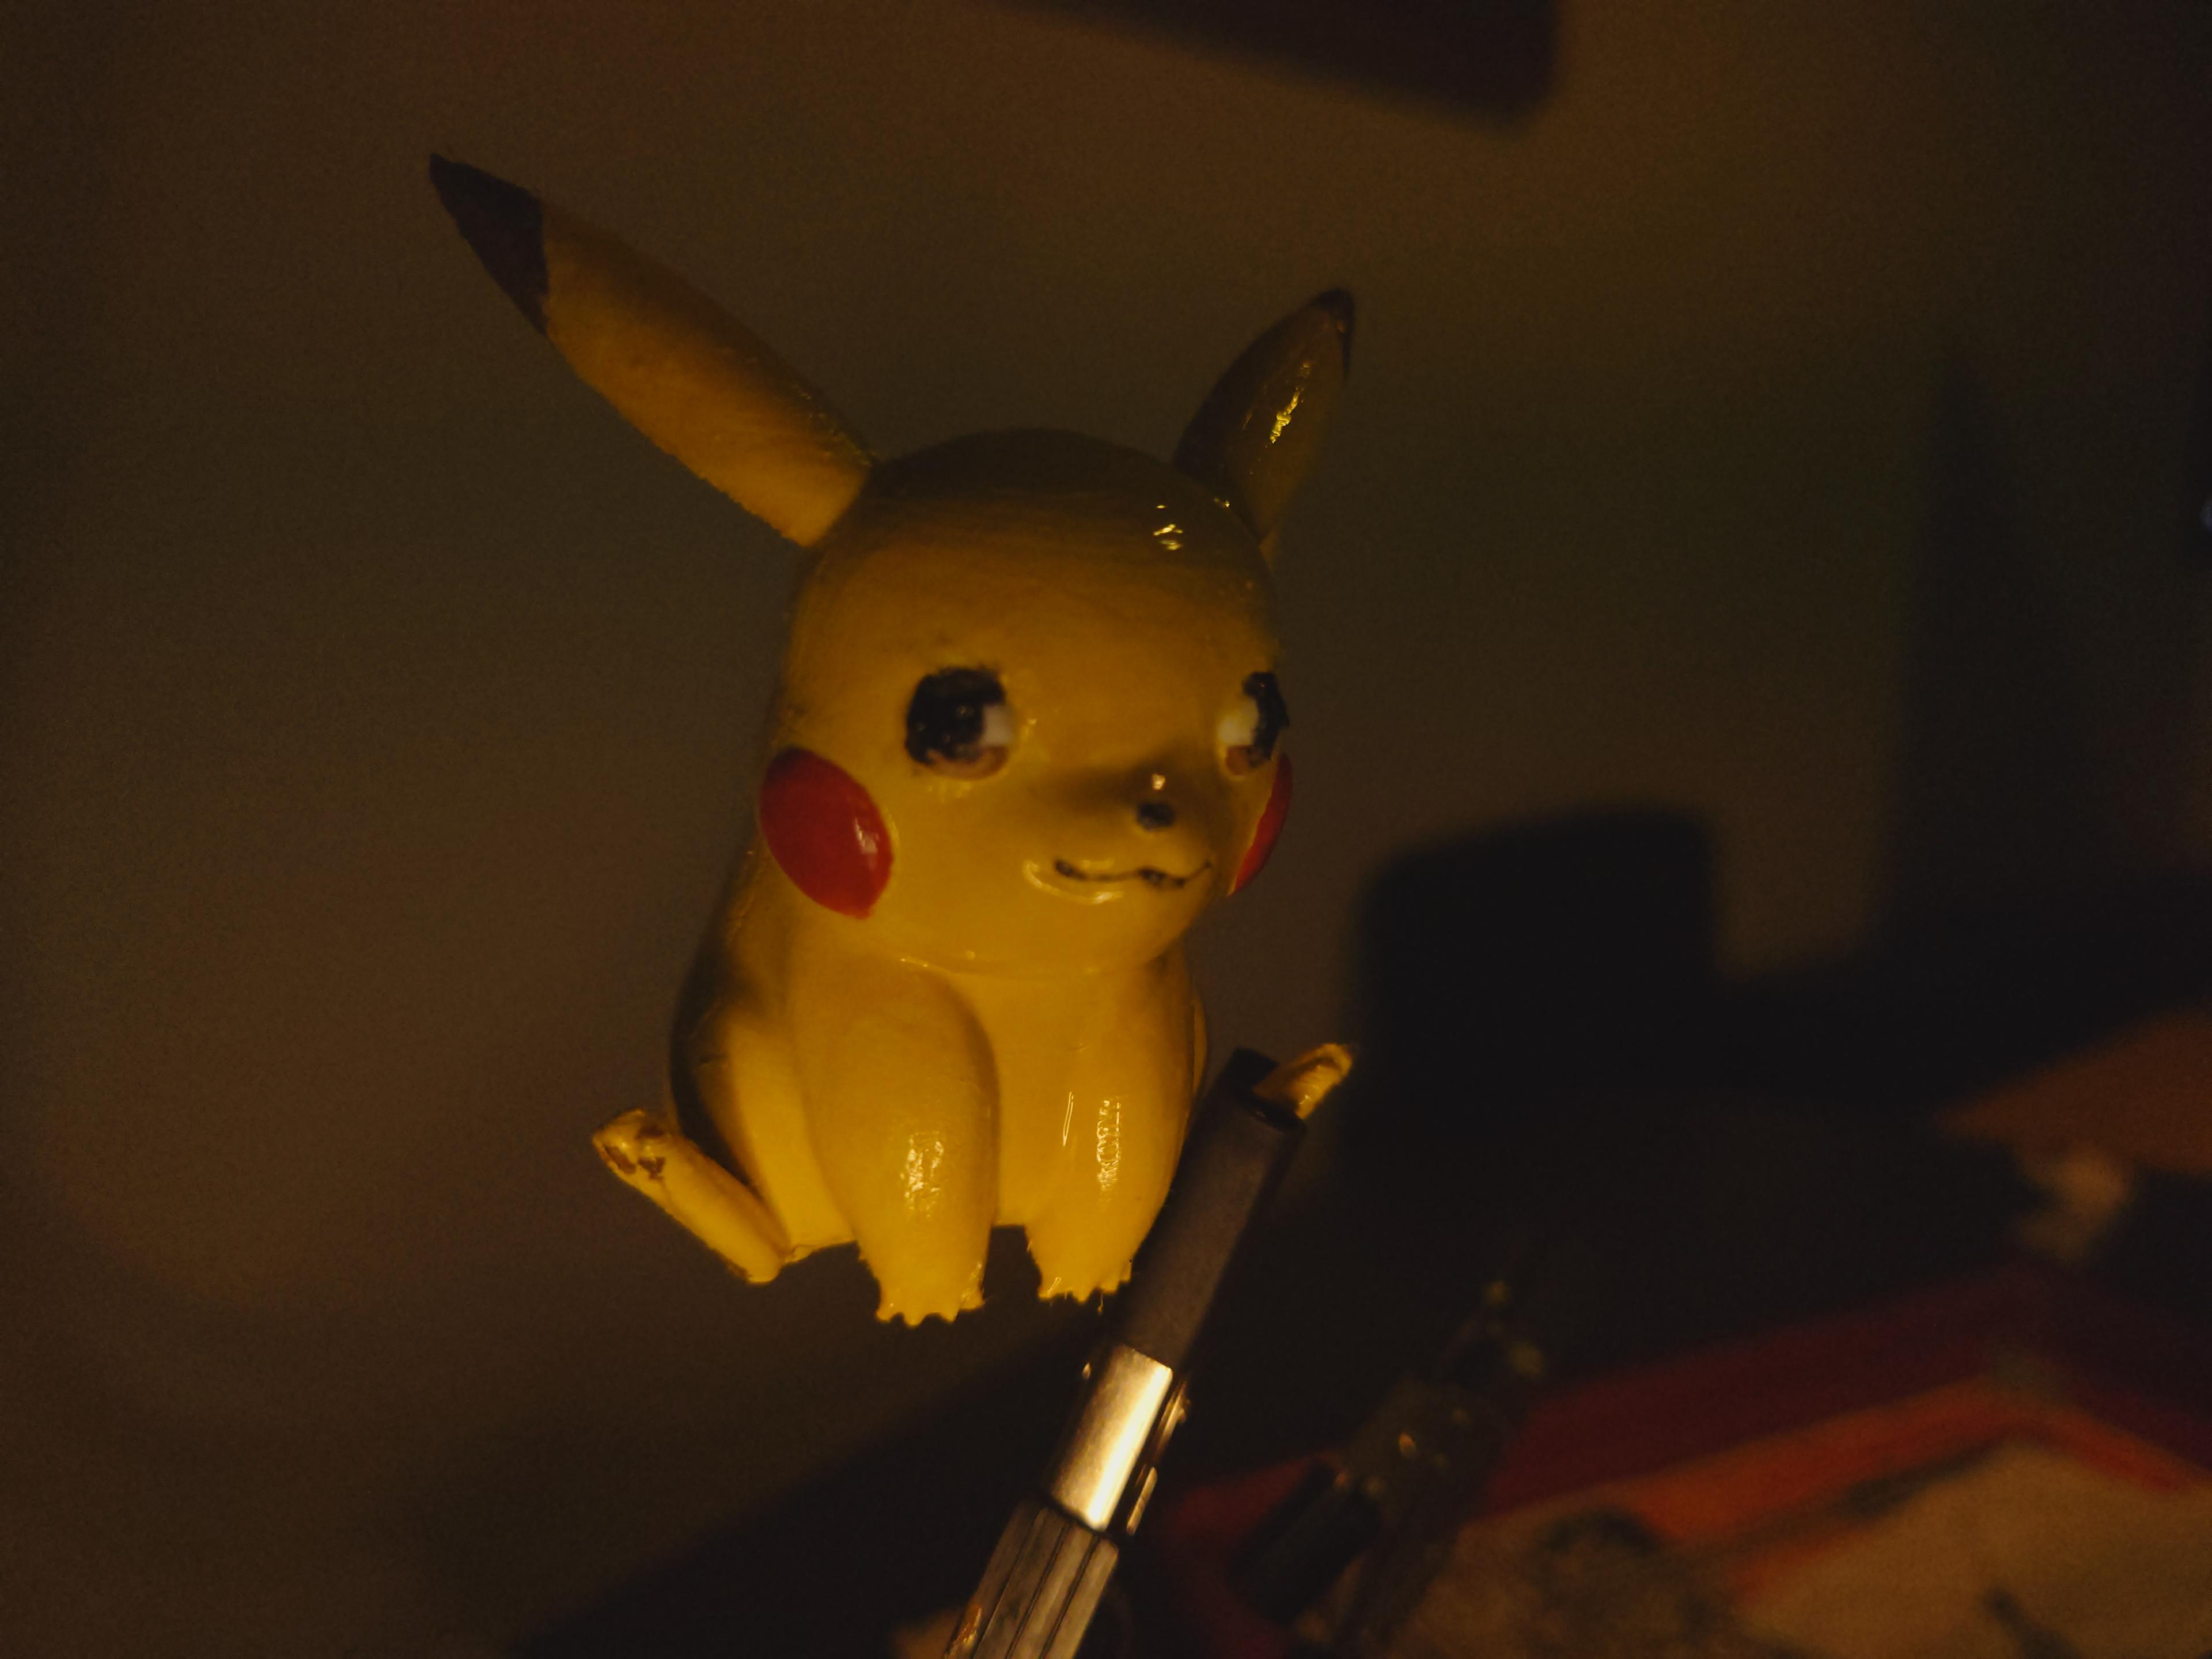 Pikachu - Pokemon - Fan Art - Prusa Mini, 0.7mm Layer height, my first acrylic model paint job - 3d model